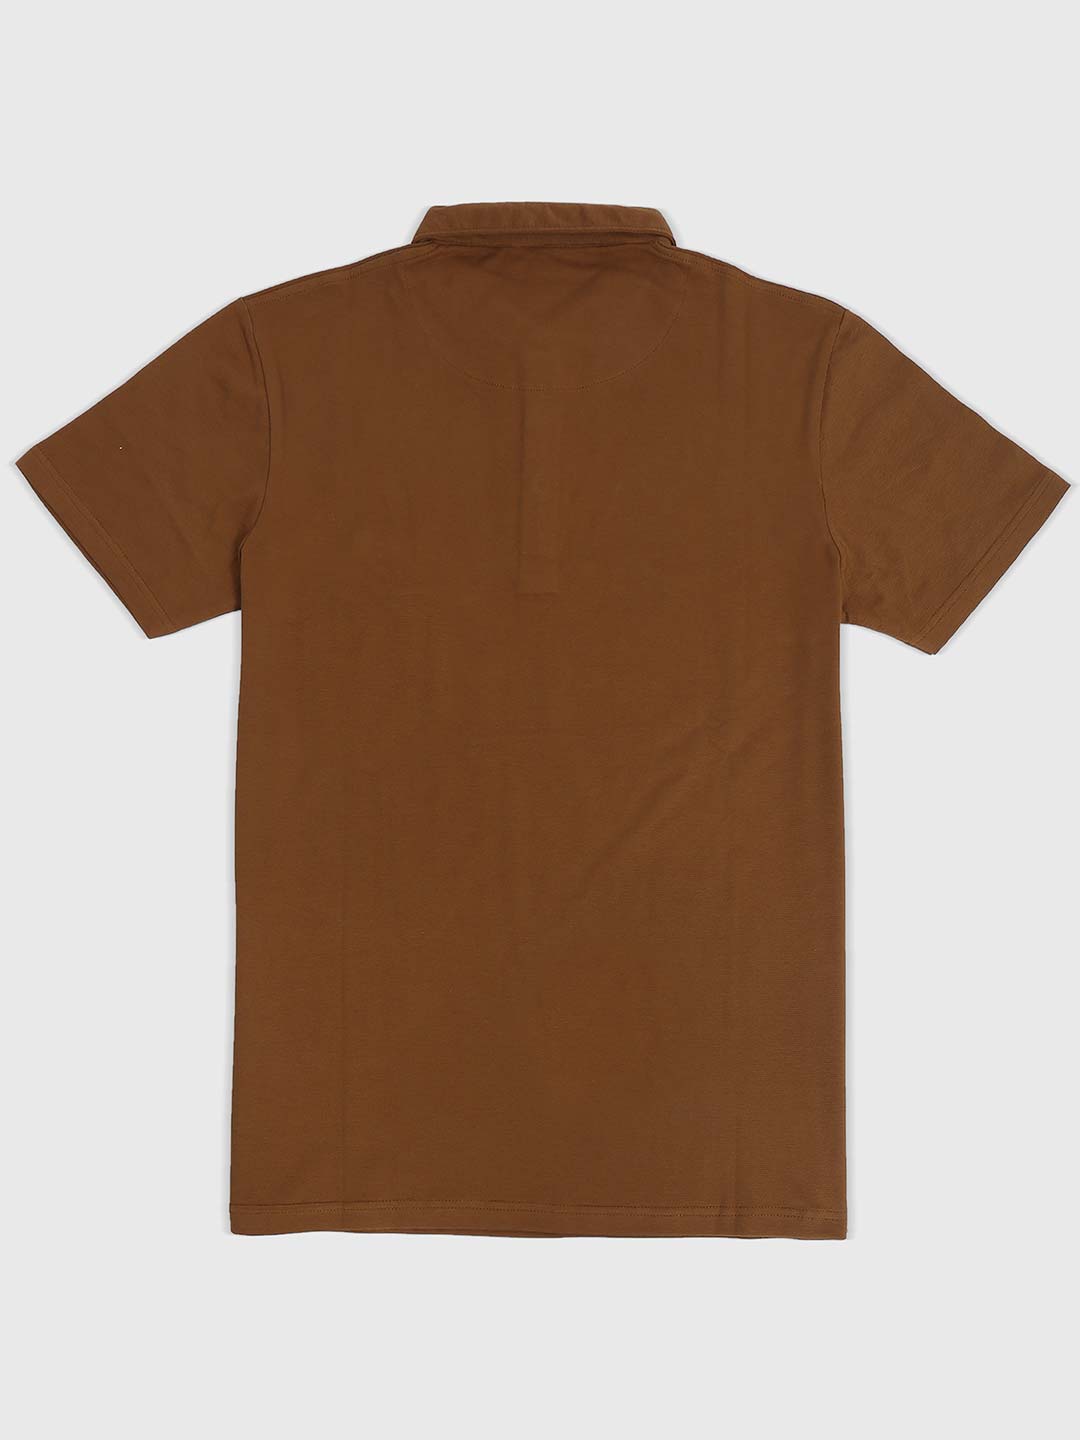 brown t shirt